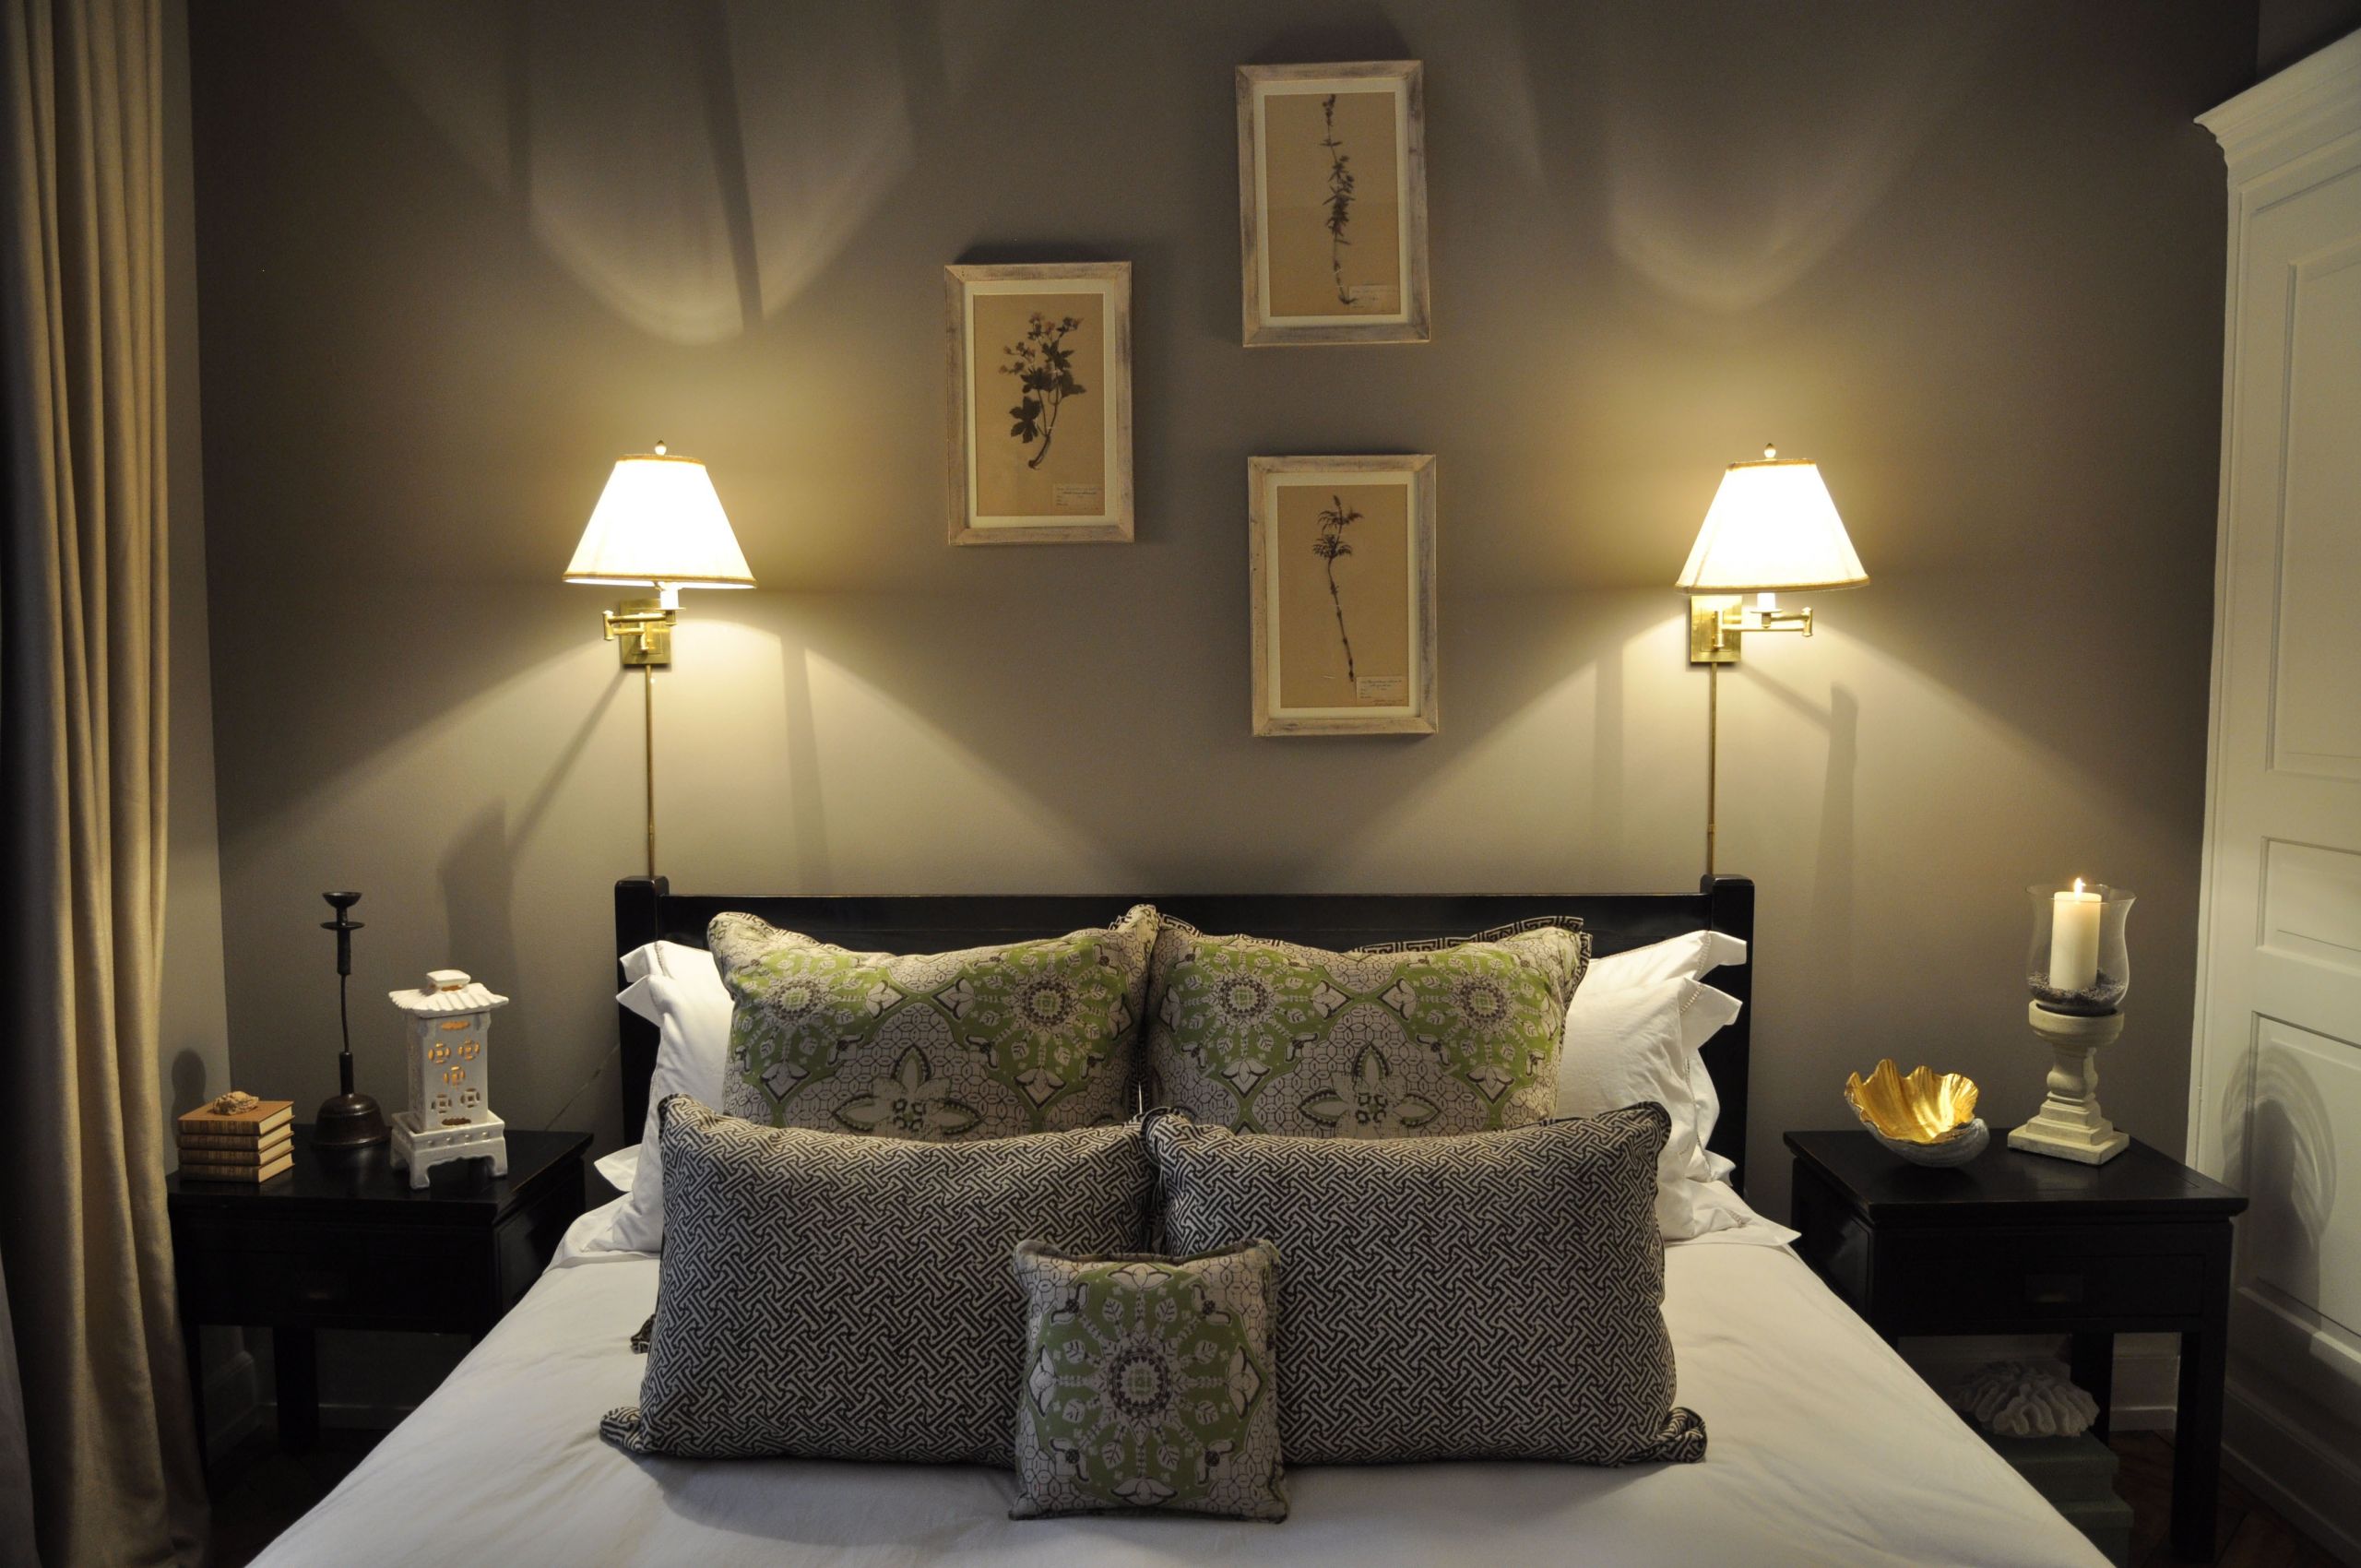 Wall Lighting Bedroom
 Popular Plug In Wall Lamps For Bedroom Ideas Bedroom